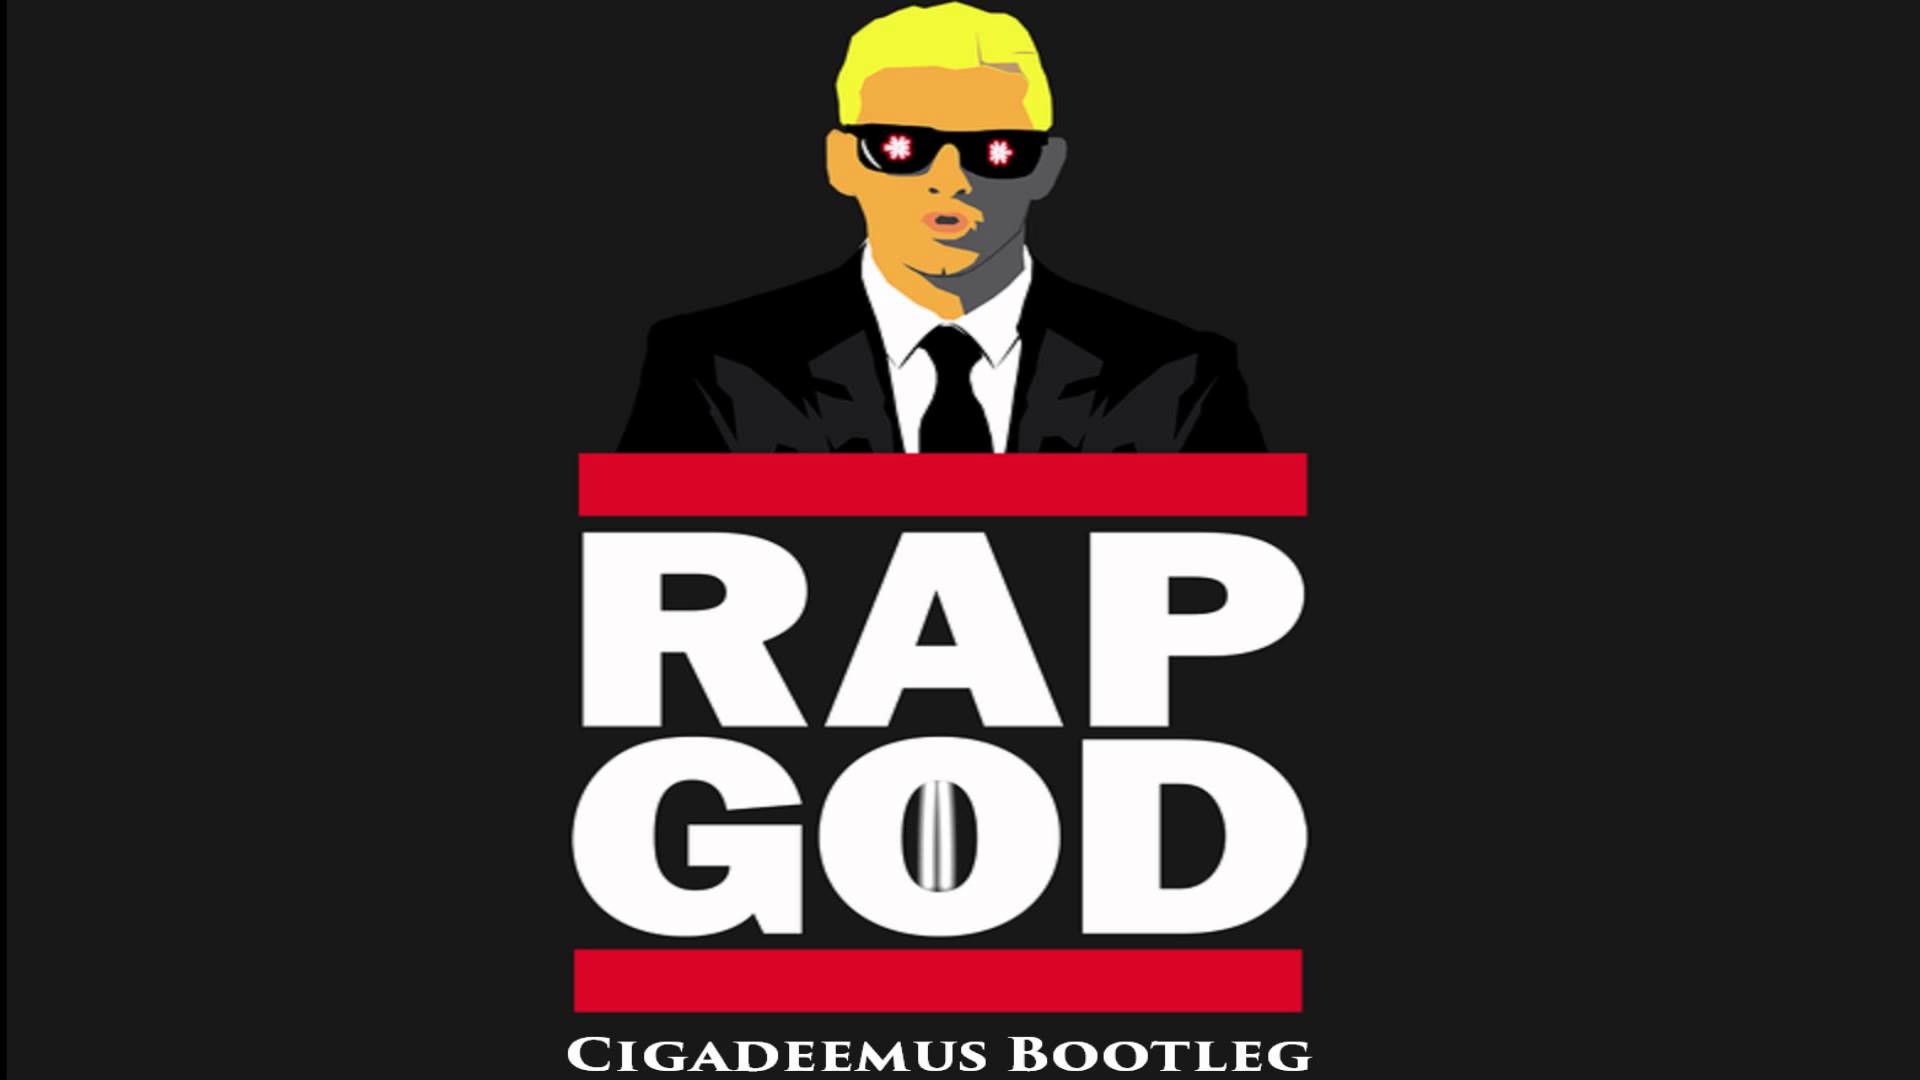 Eminem Rap God Wallpapers (80+ images)1920 x 1080